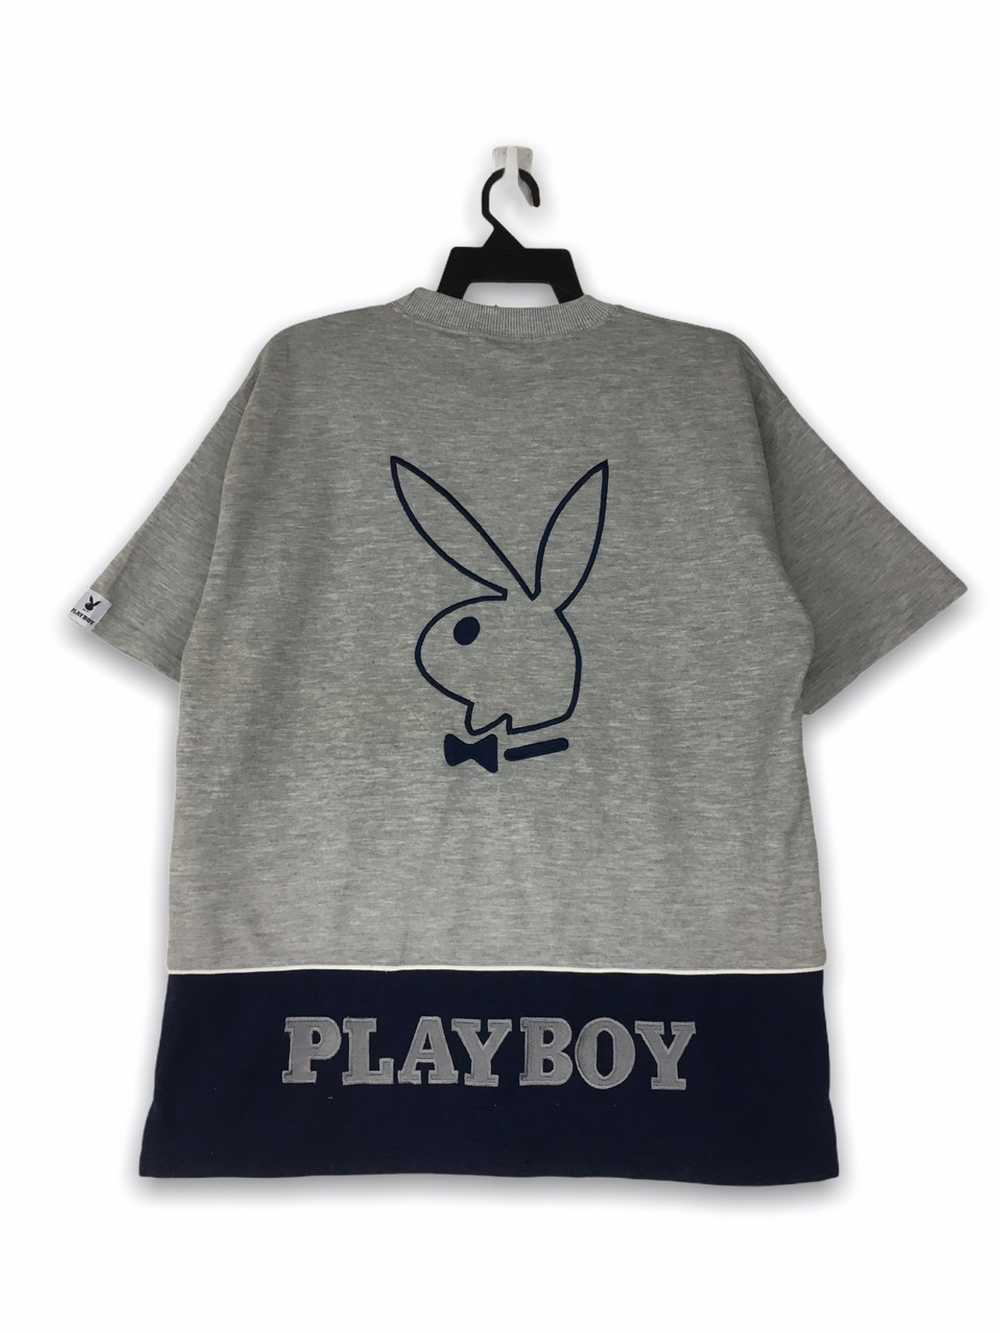 Playboy × Vintage Rare vintage Playboy Embroidery - image 6